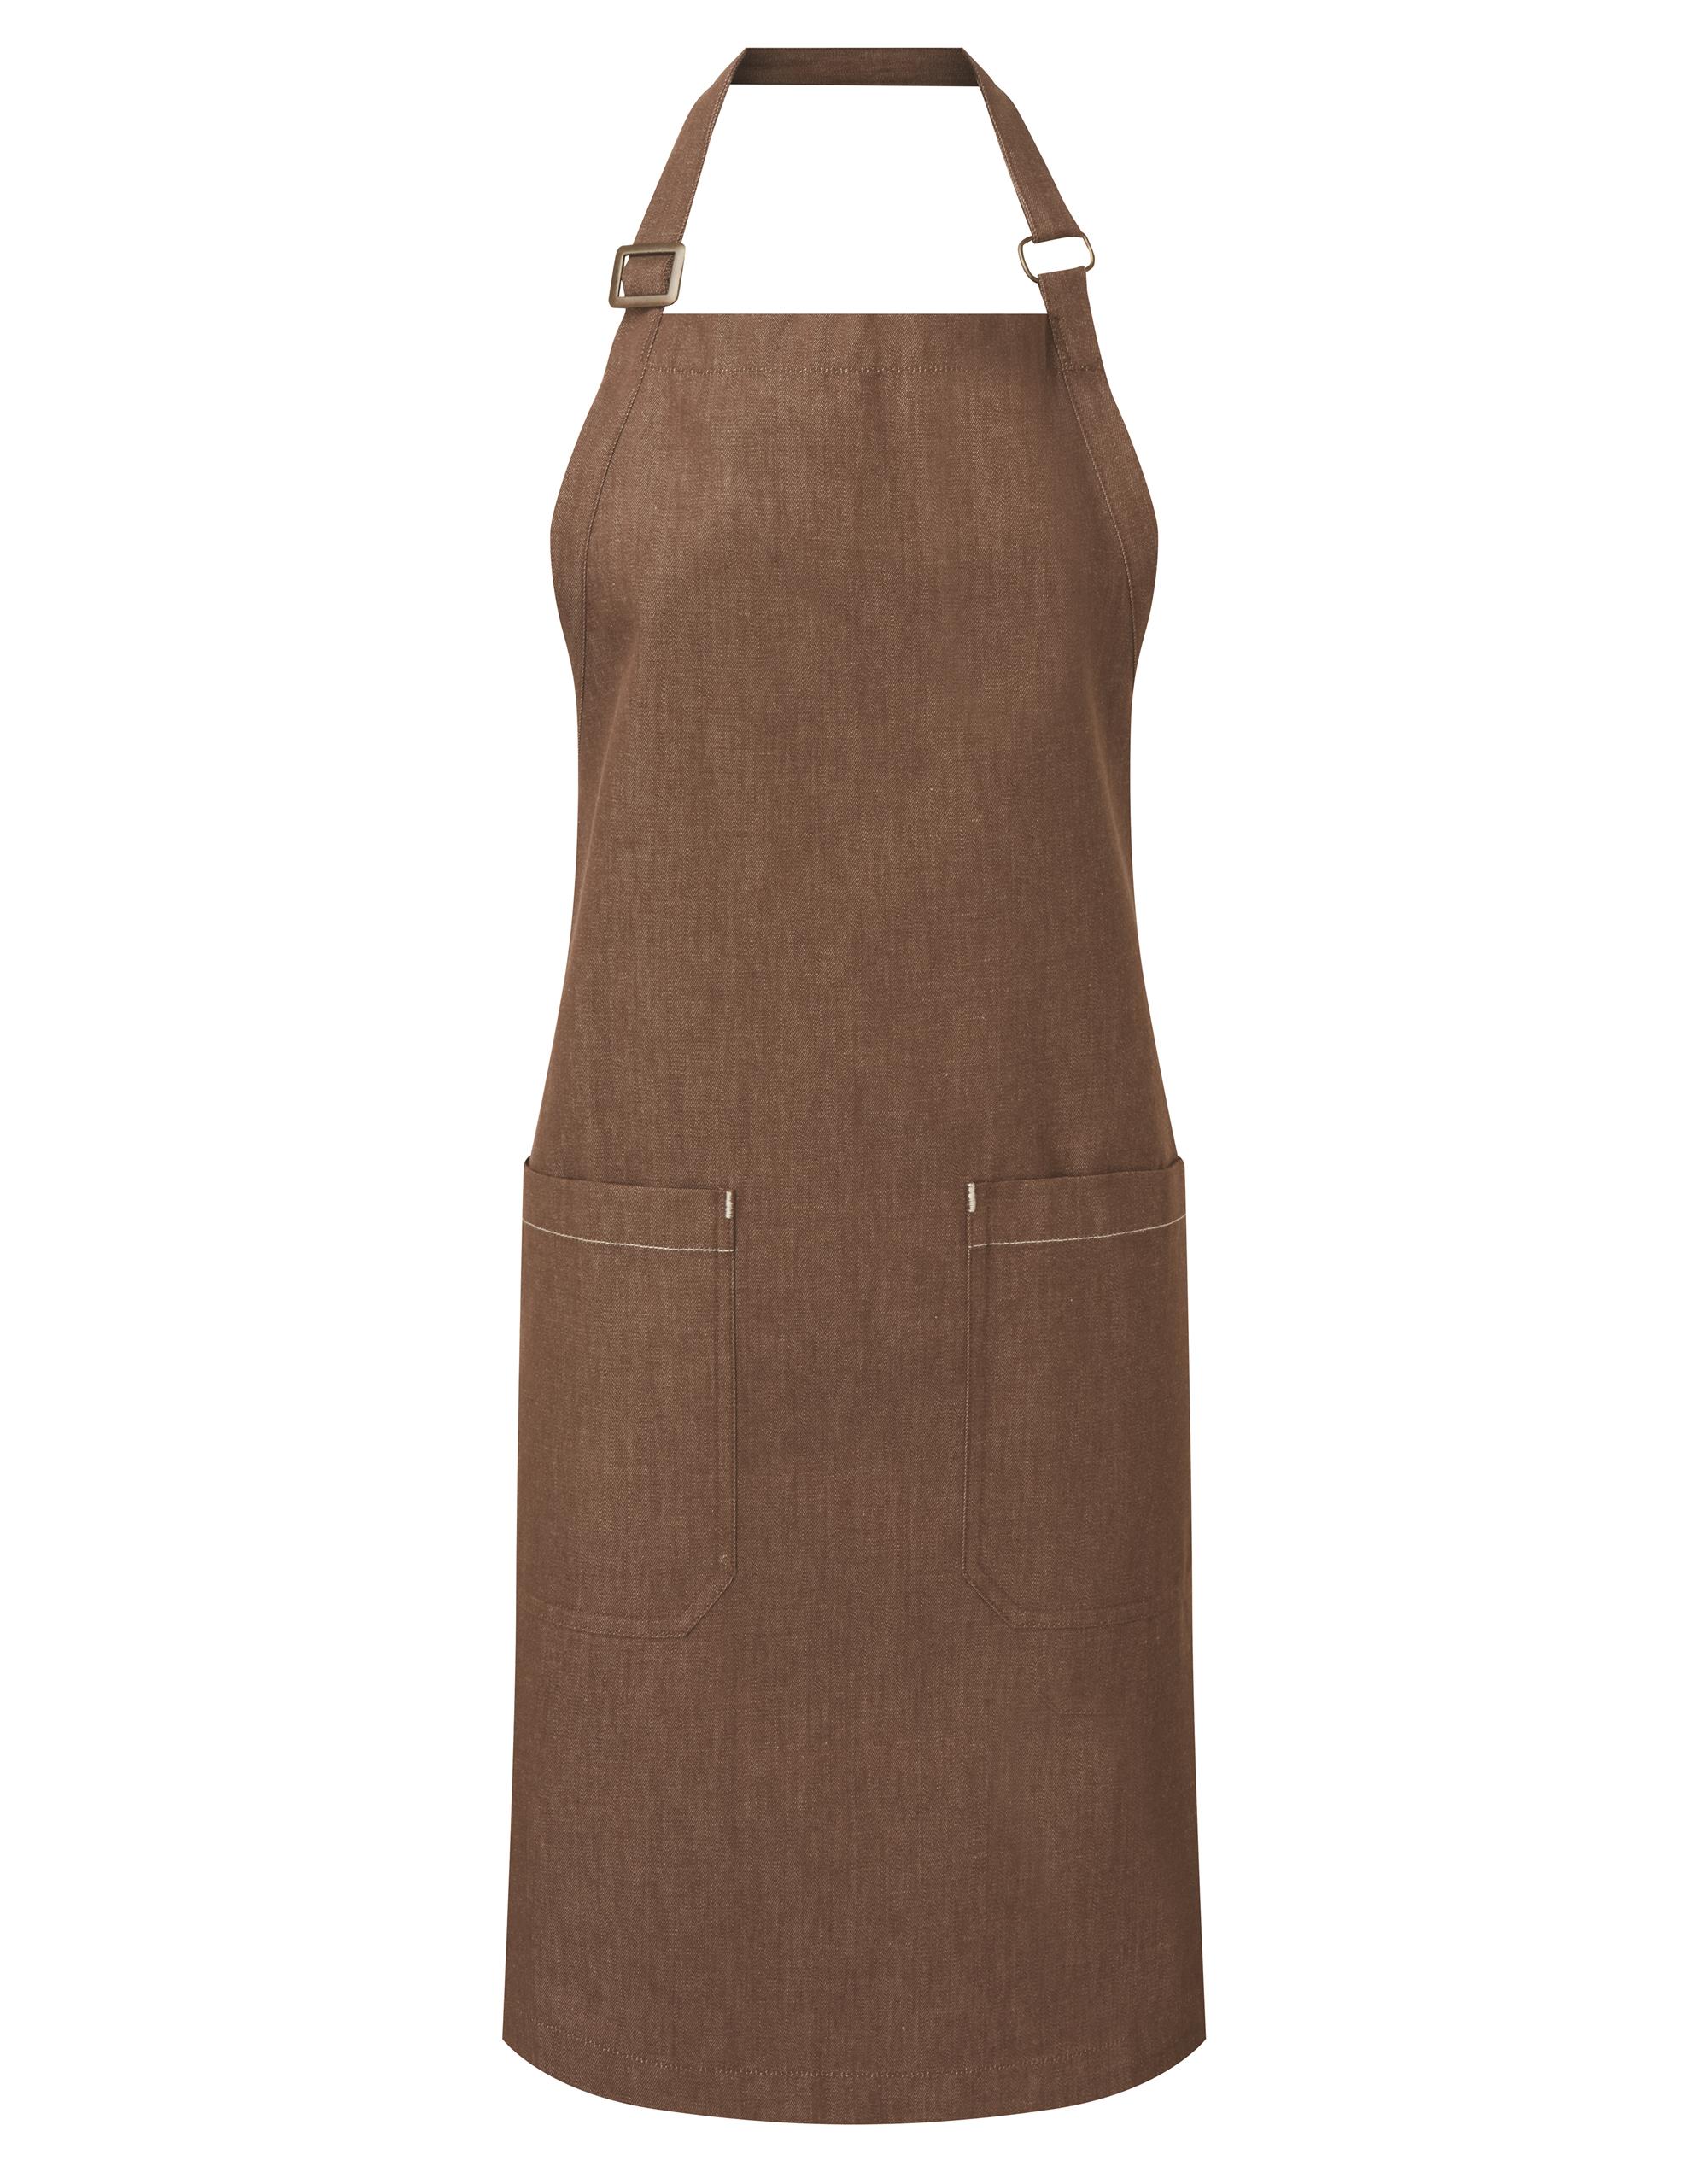 Sustainable denim bib apron 80 x 72 cm Premier® Brown Denim